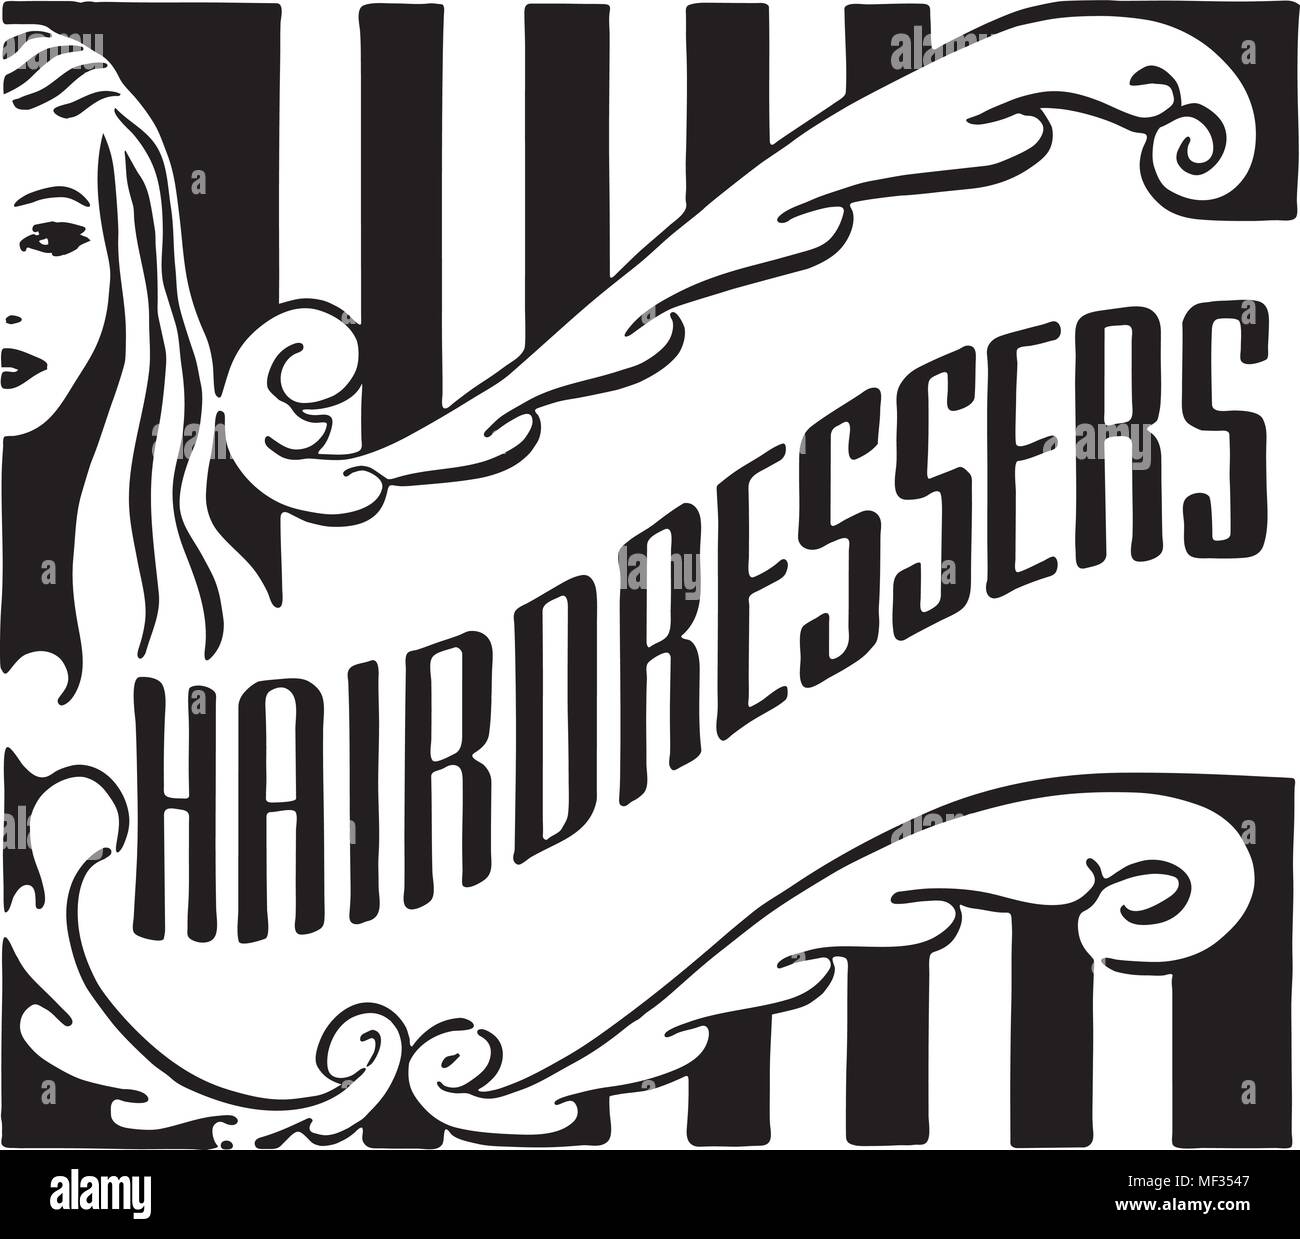 Hairdressers - Retro Ad Art Banner Stock Vector